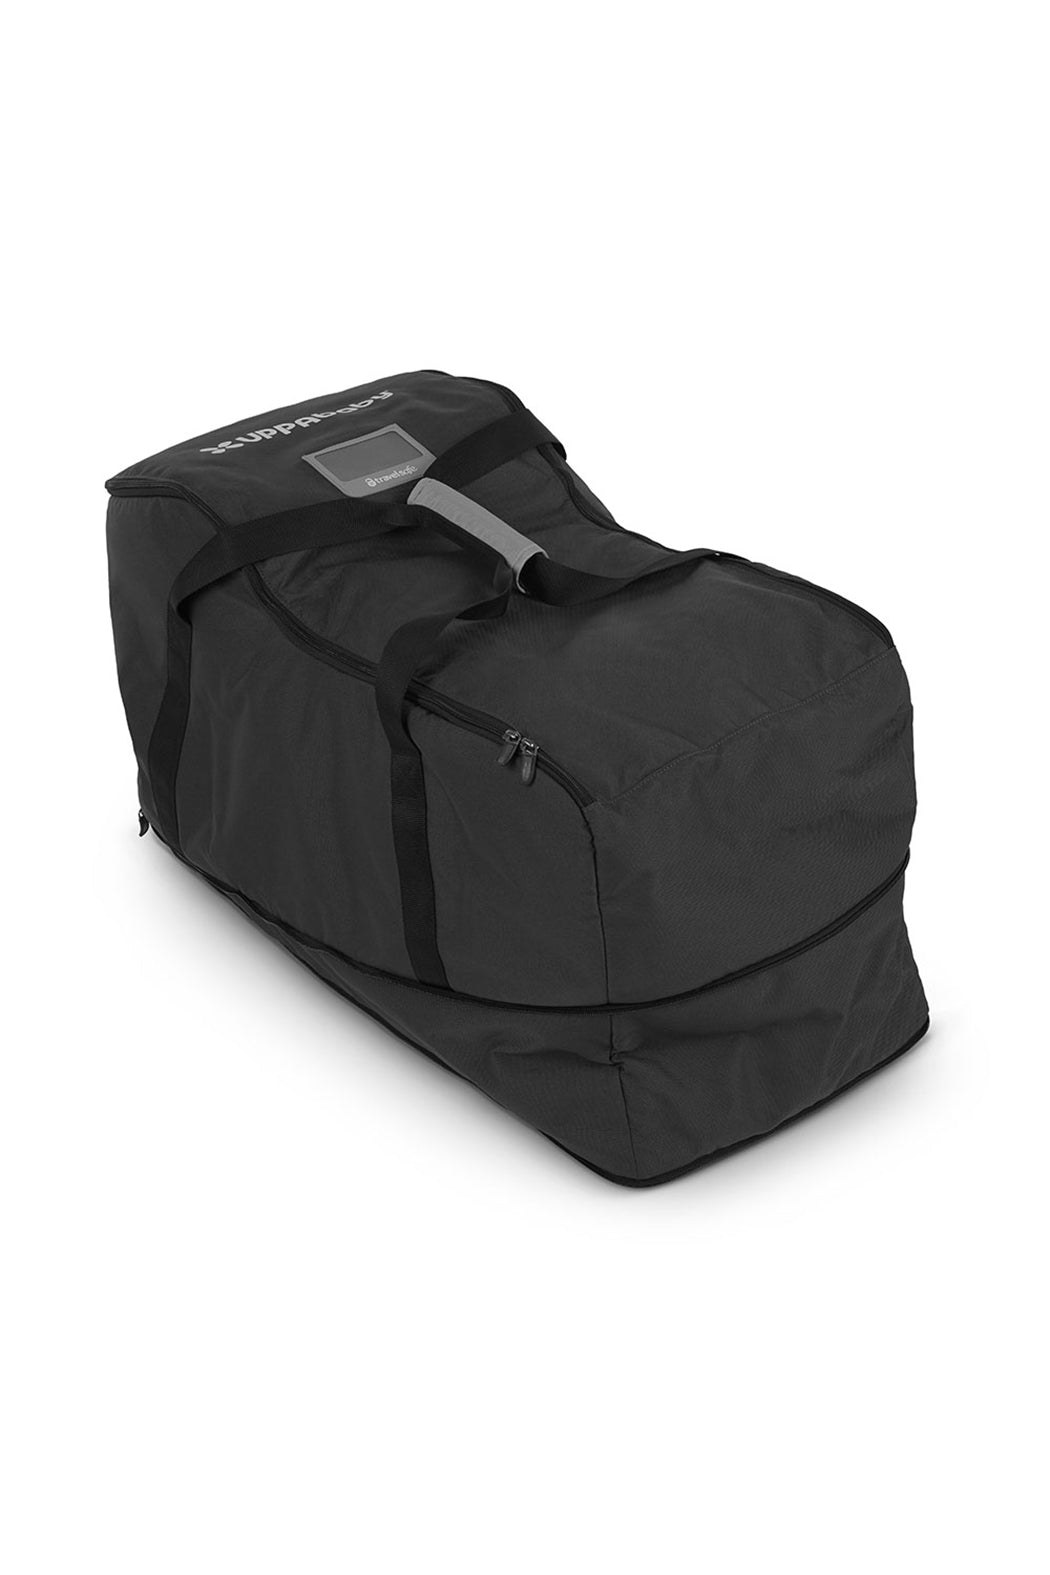 UPPAbaby Travel Bag For MESA Car Seat